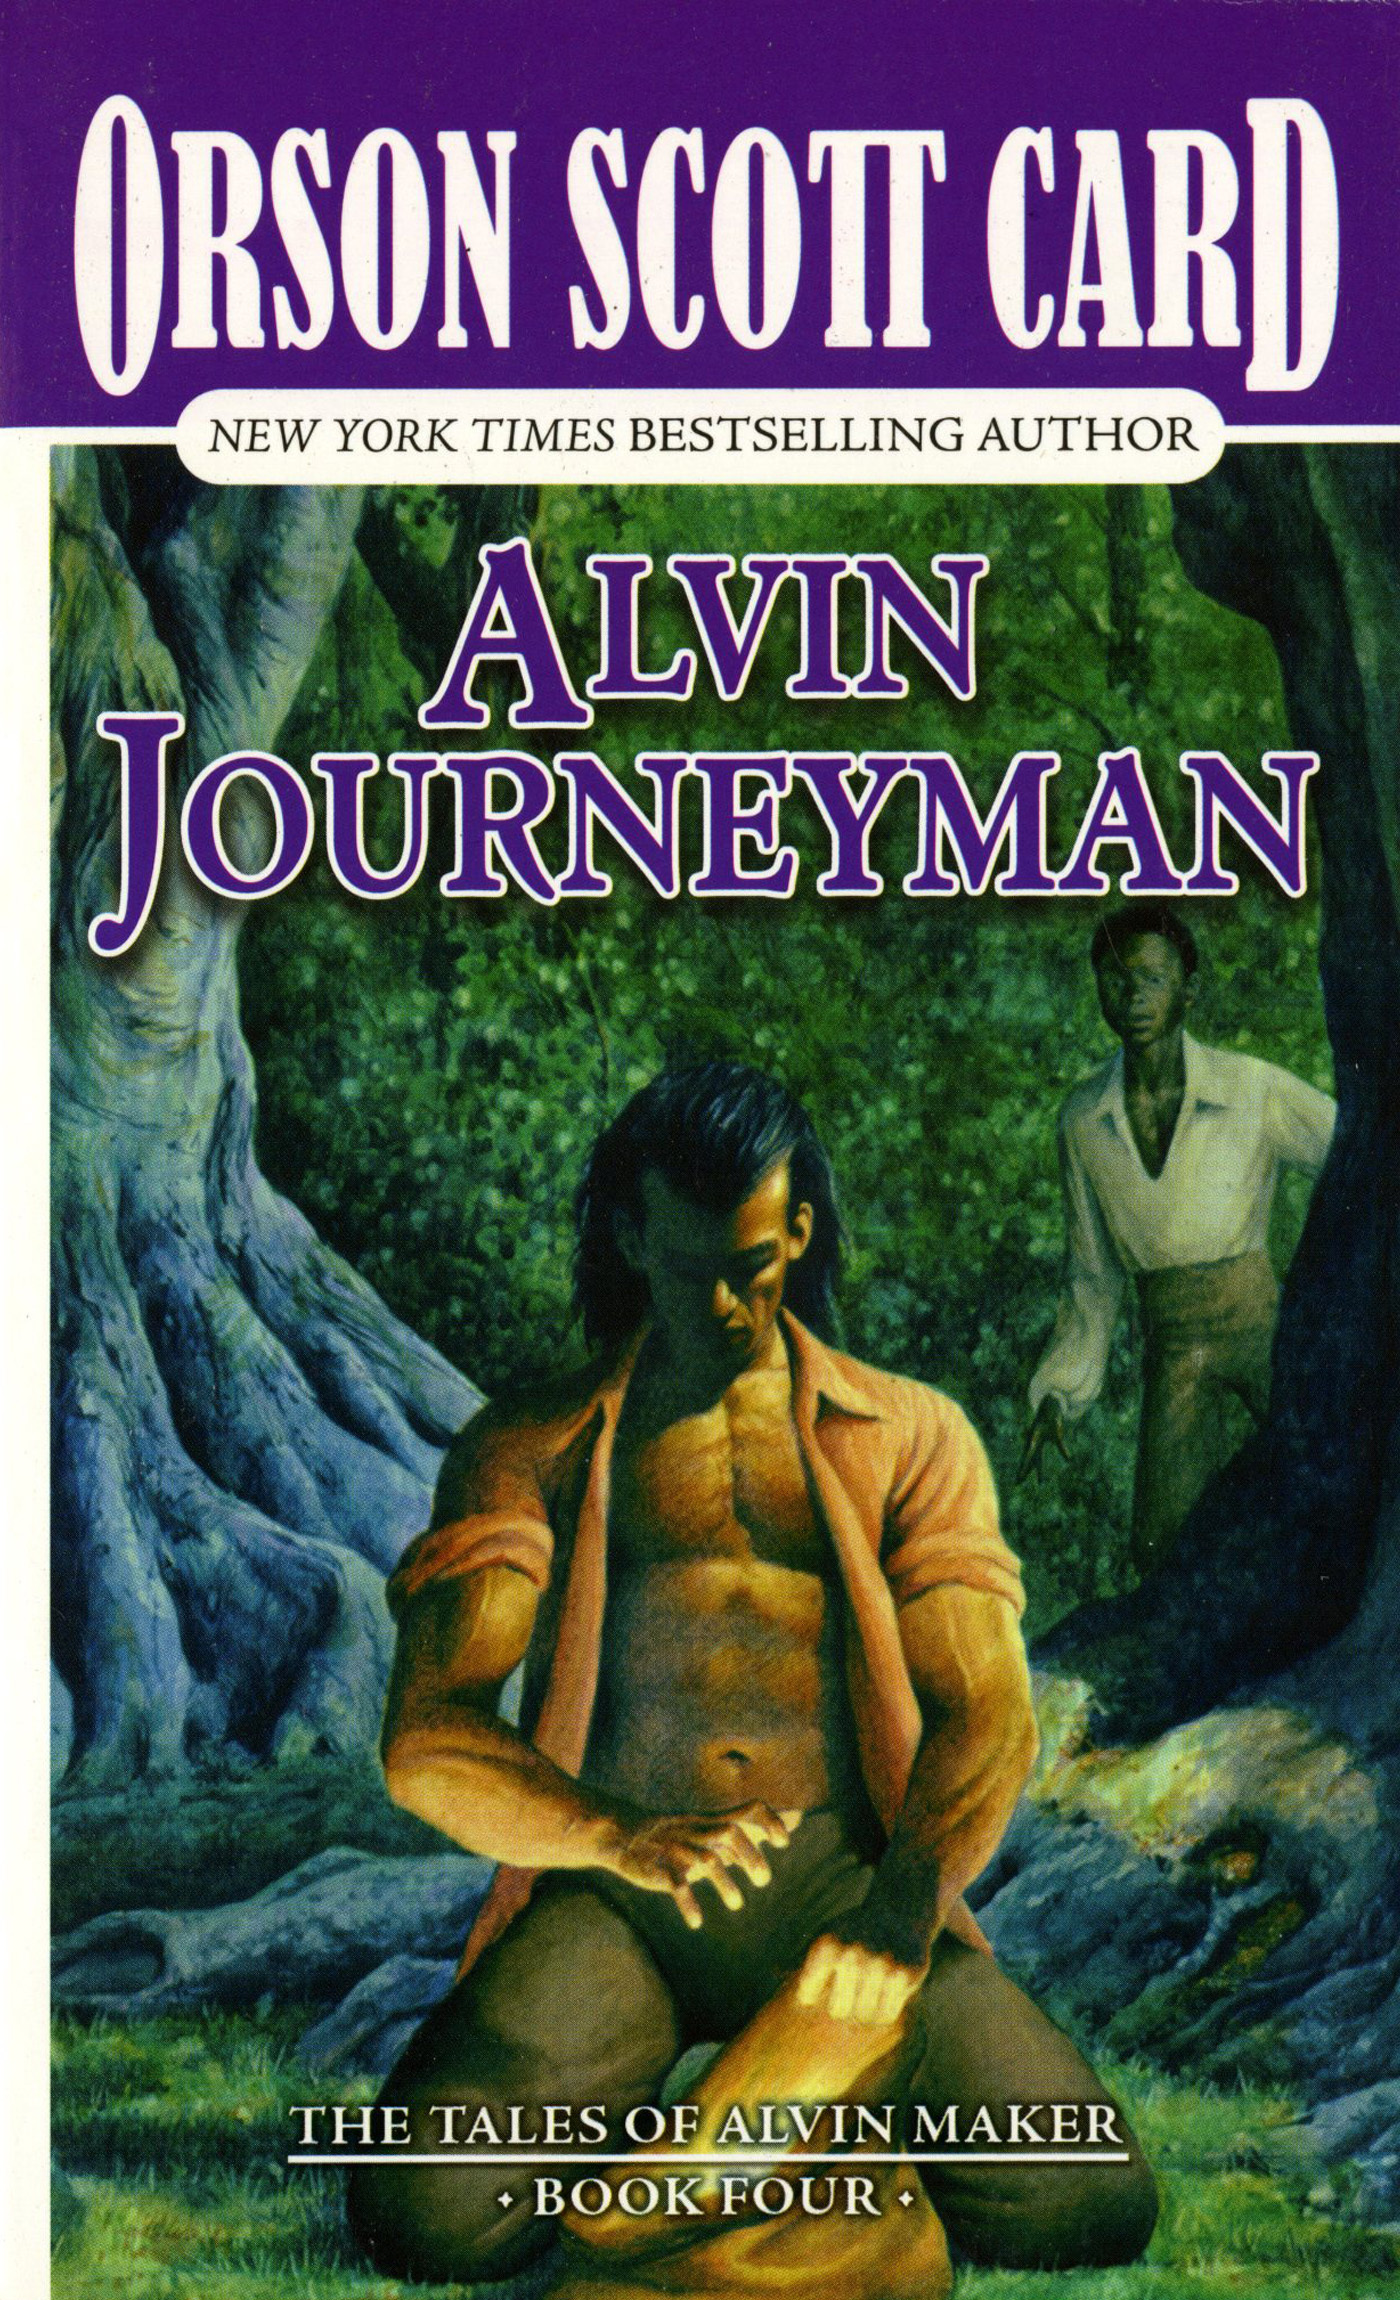 Alvin Journeyman : The Tales of Alvin Maker, Book Four by Orson Scott Card